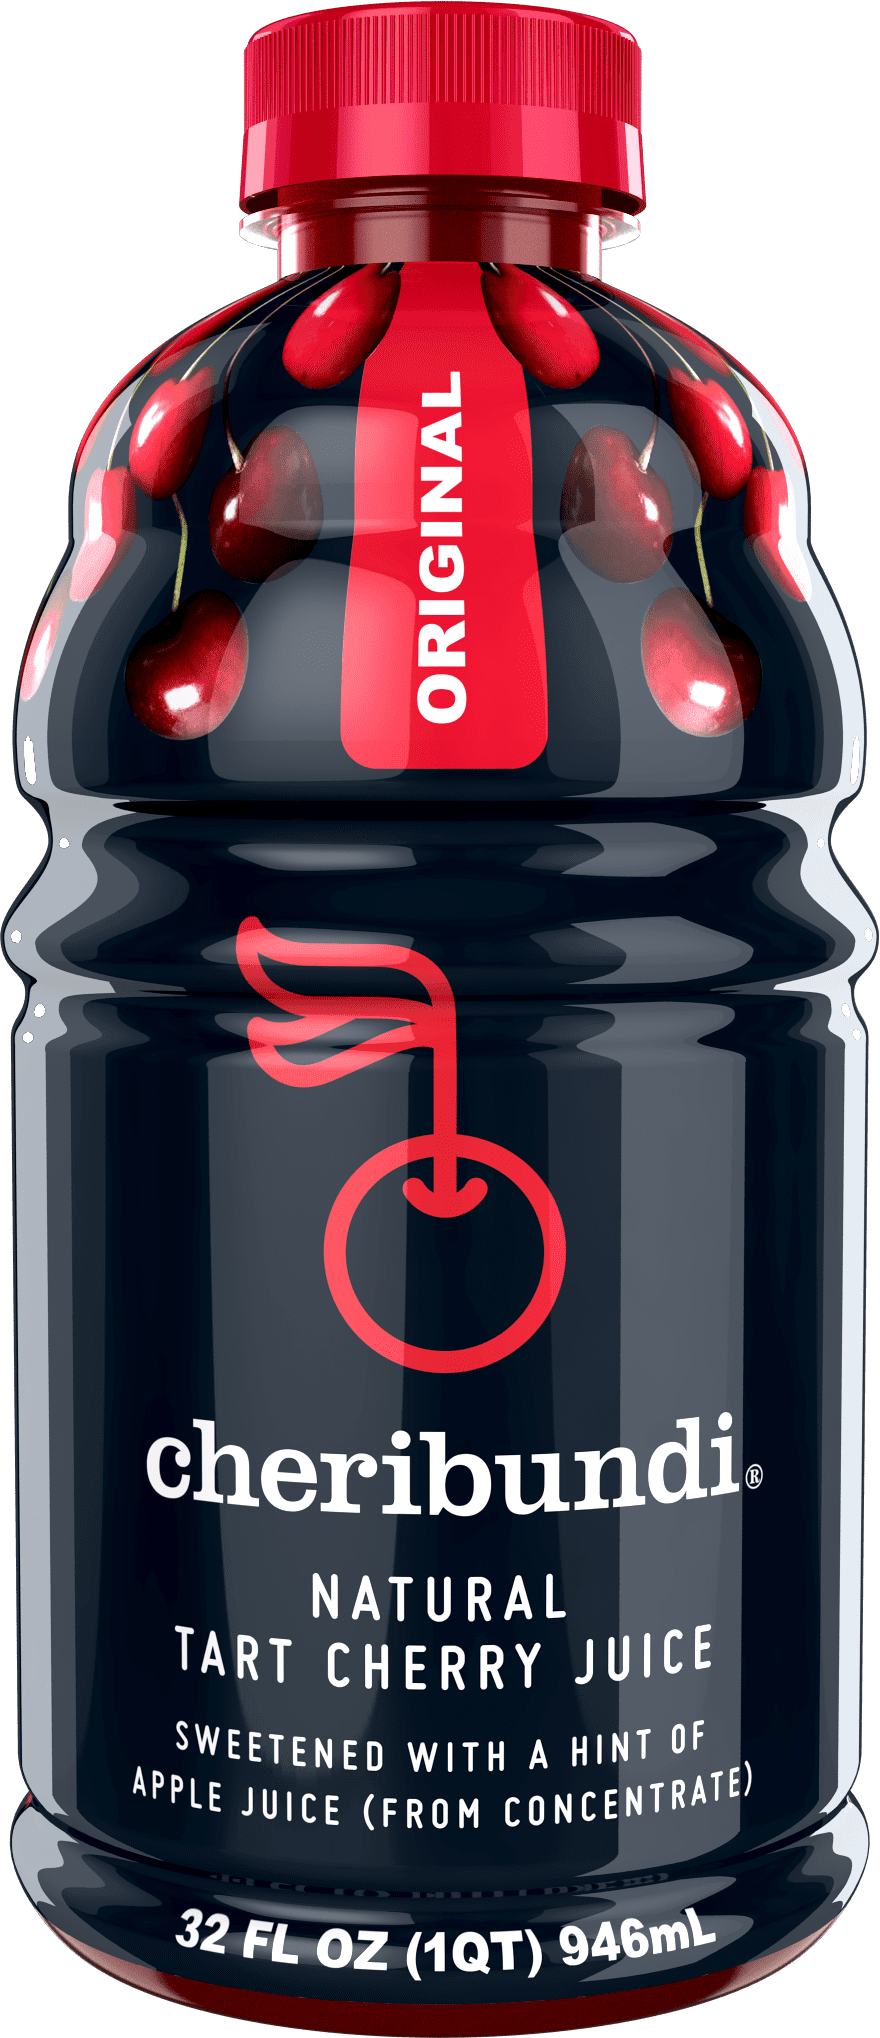 Cheribundi Tart Cherry Juice, 32 Fl. Oz. - Walmart.com